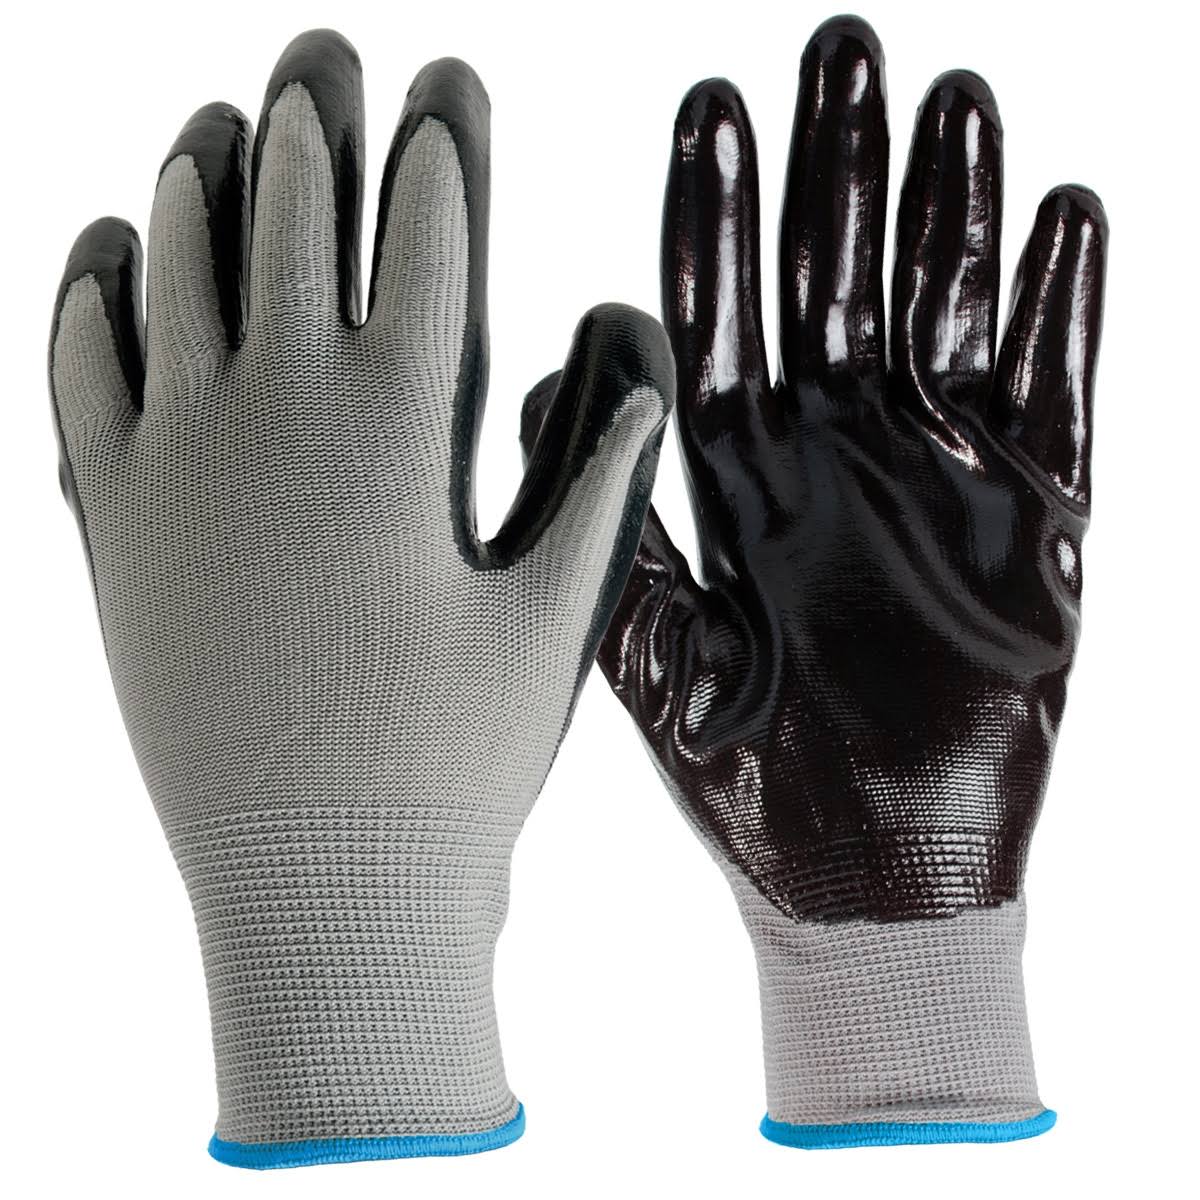 Big Time Products True Grip Gloves - Medium